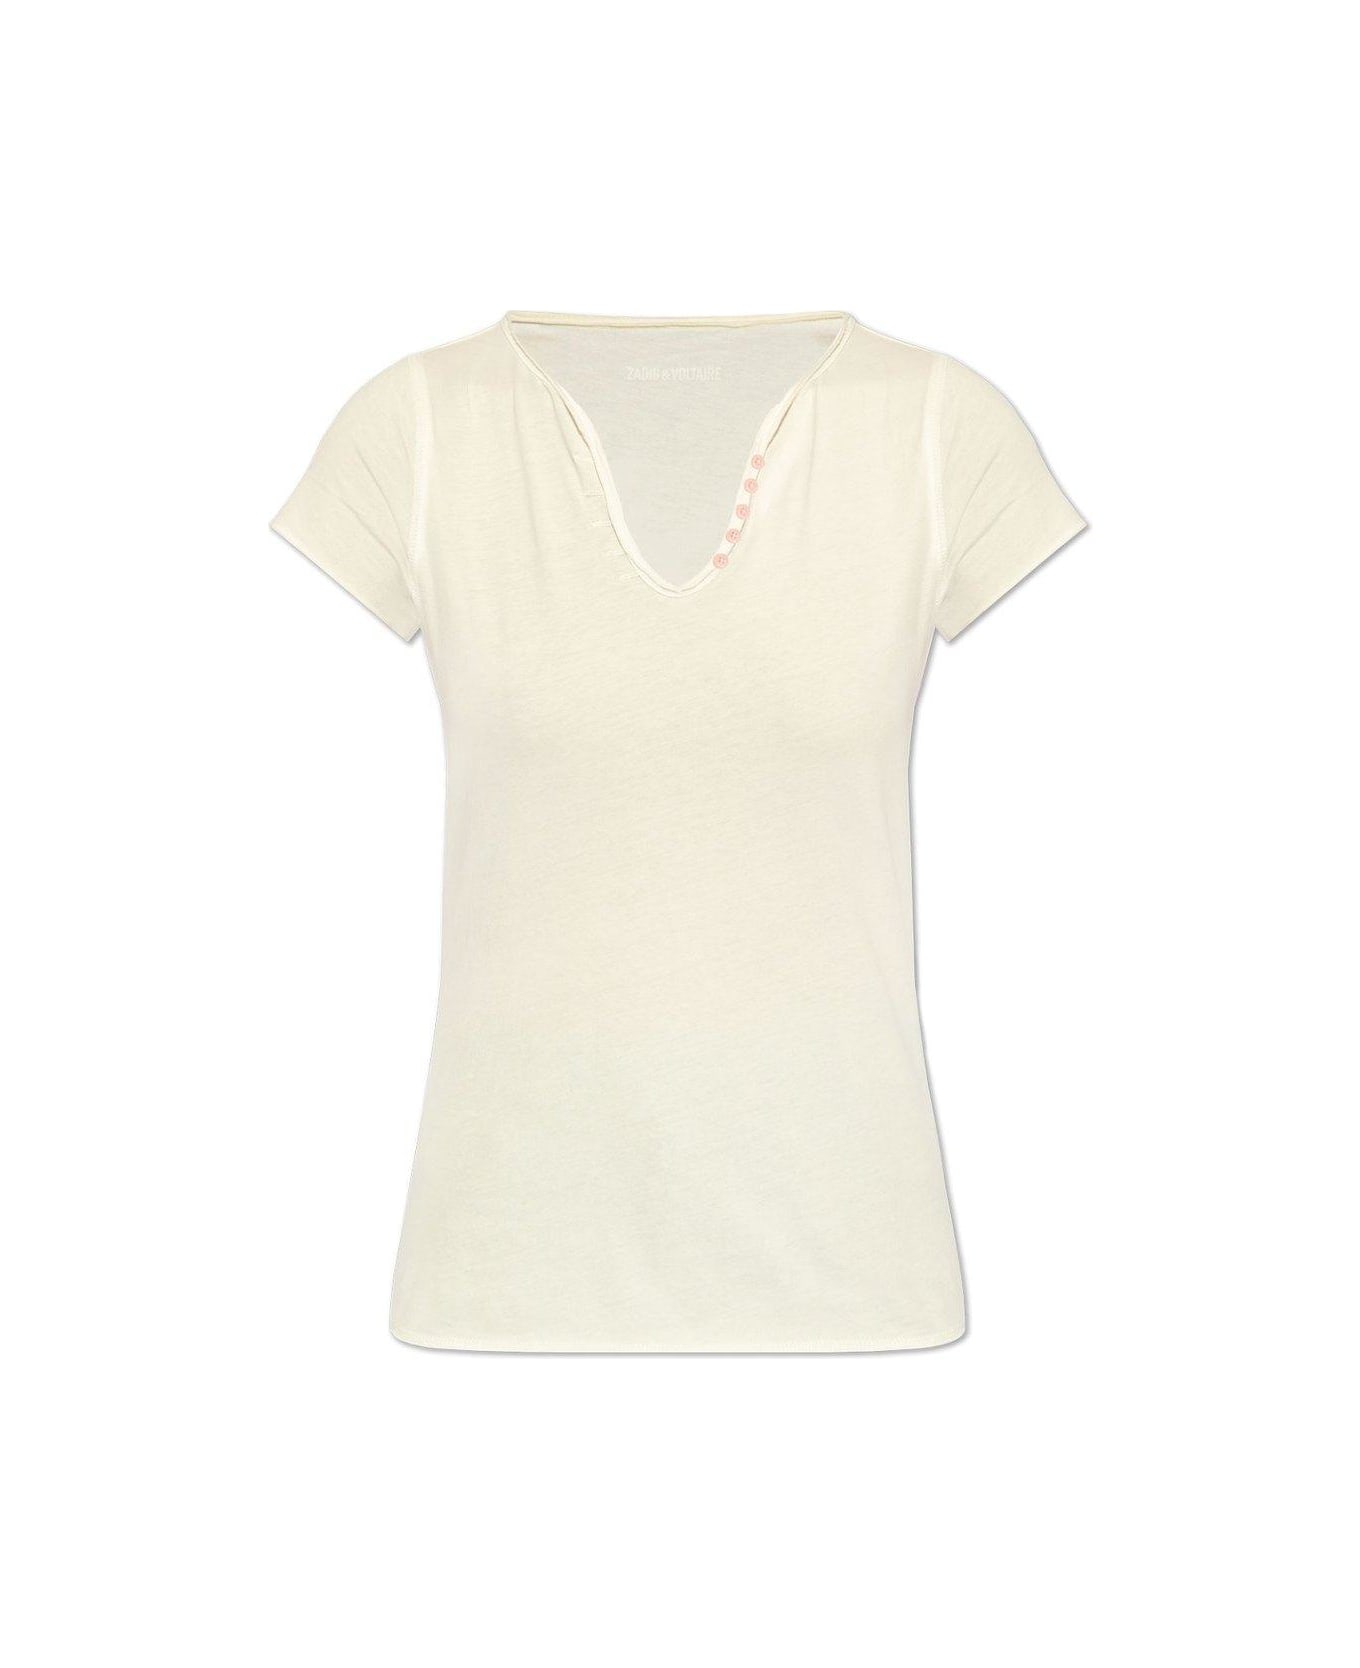 Zadig & Voltaire Logo Printed U-neck T-shirt - WHITE Tシャツ